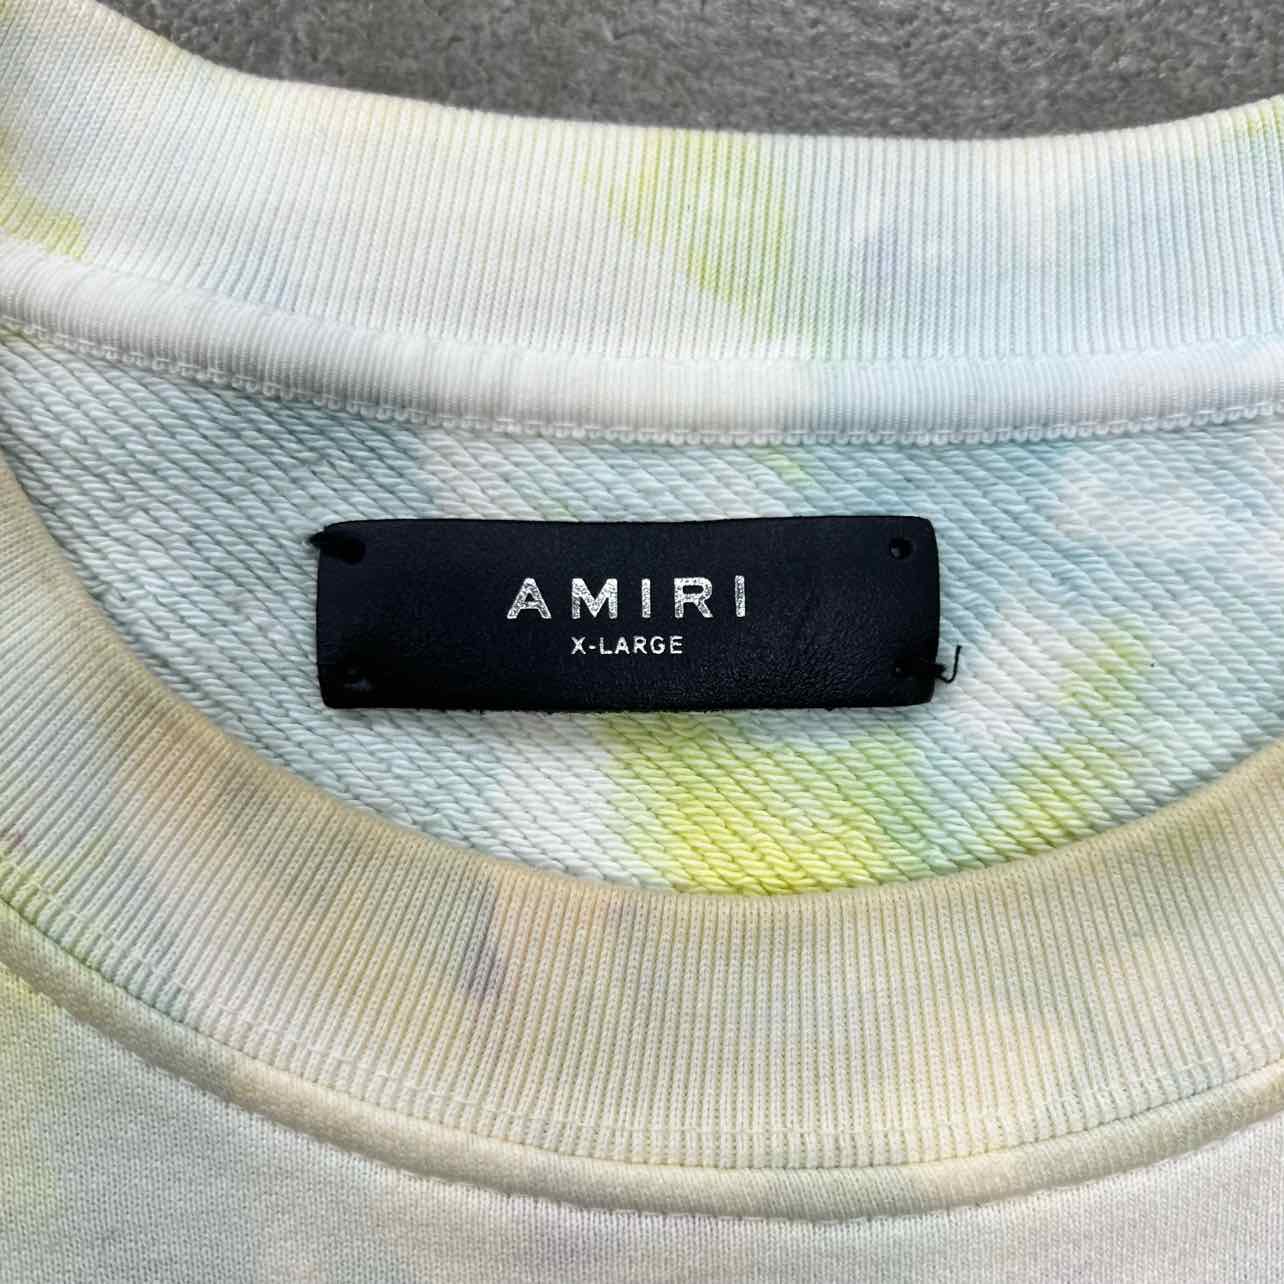 Amiri Crewneck Sweater "TIE DYE" Multicolor Used Size XL